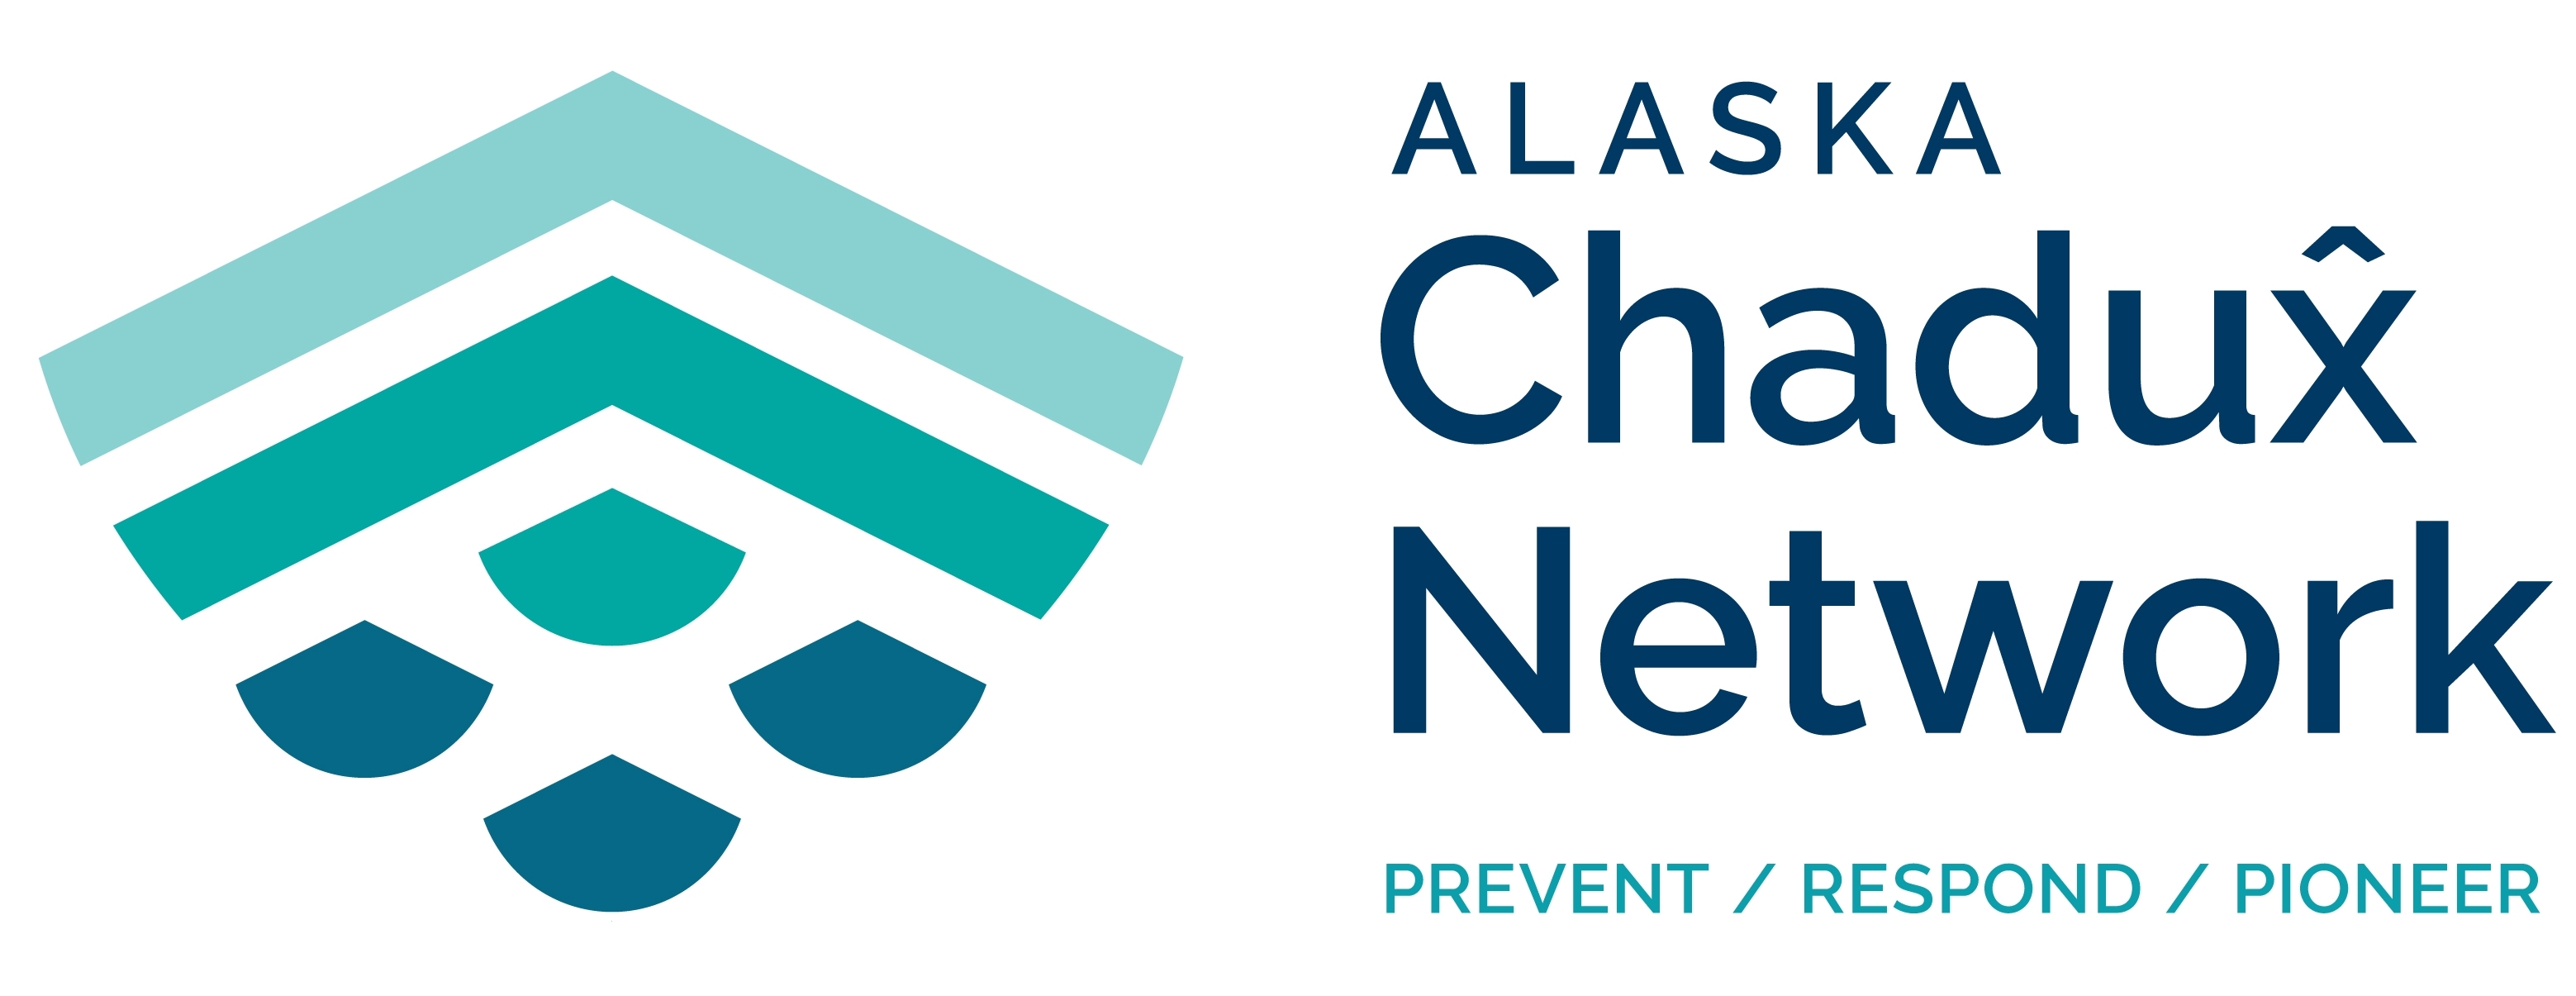 20AKN019 Alaska Chadux Network Logo